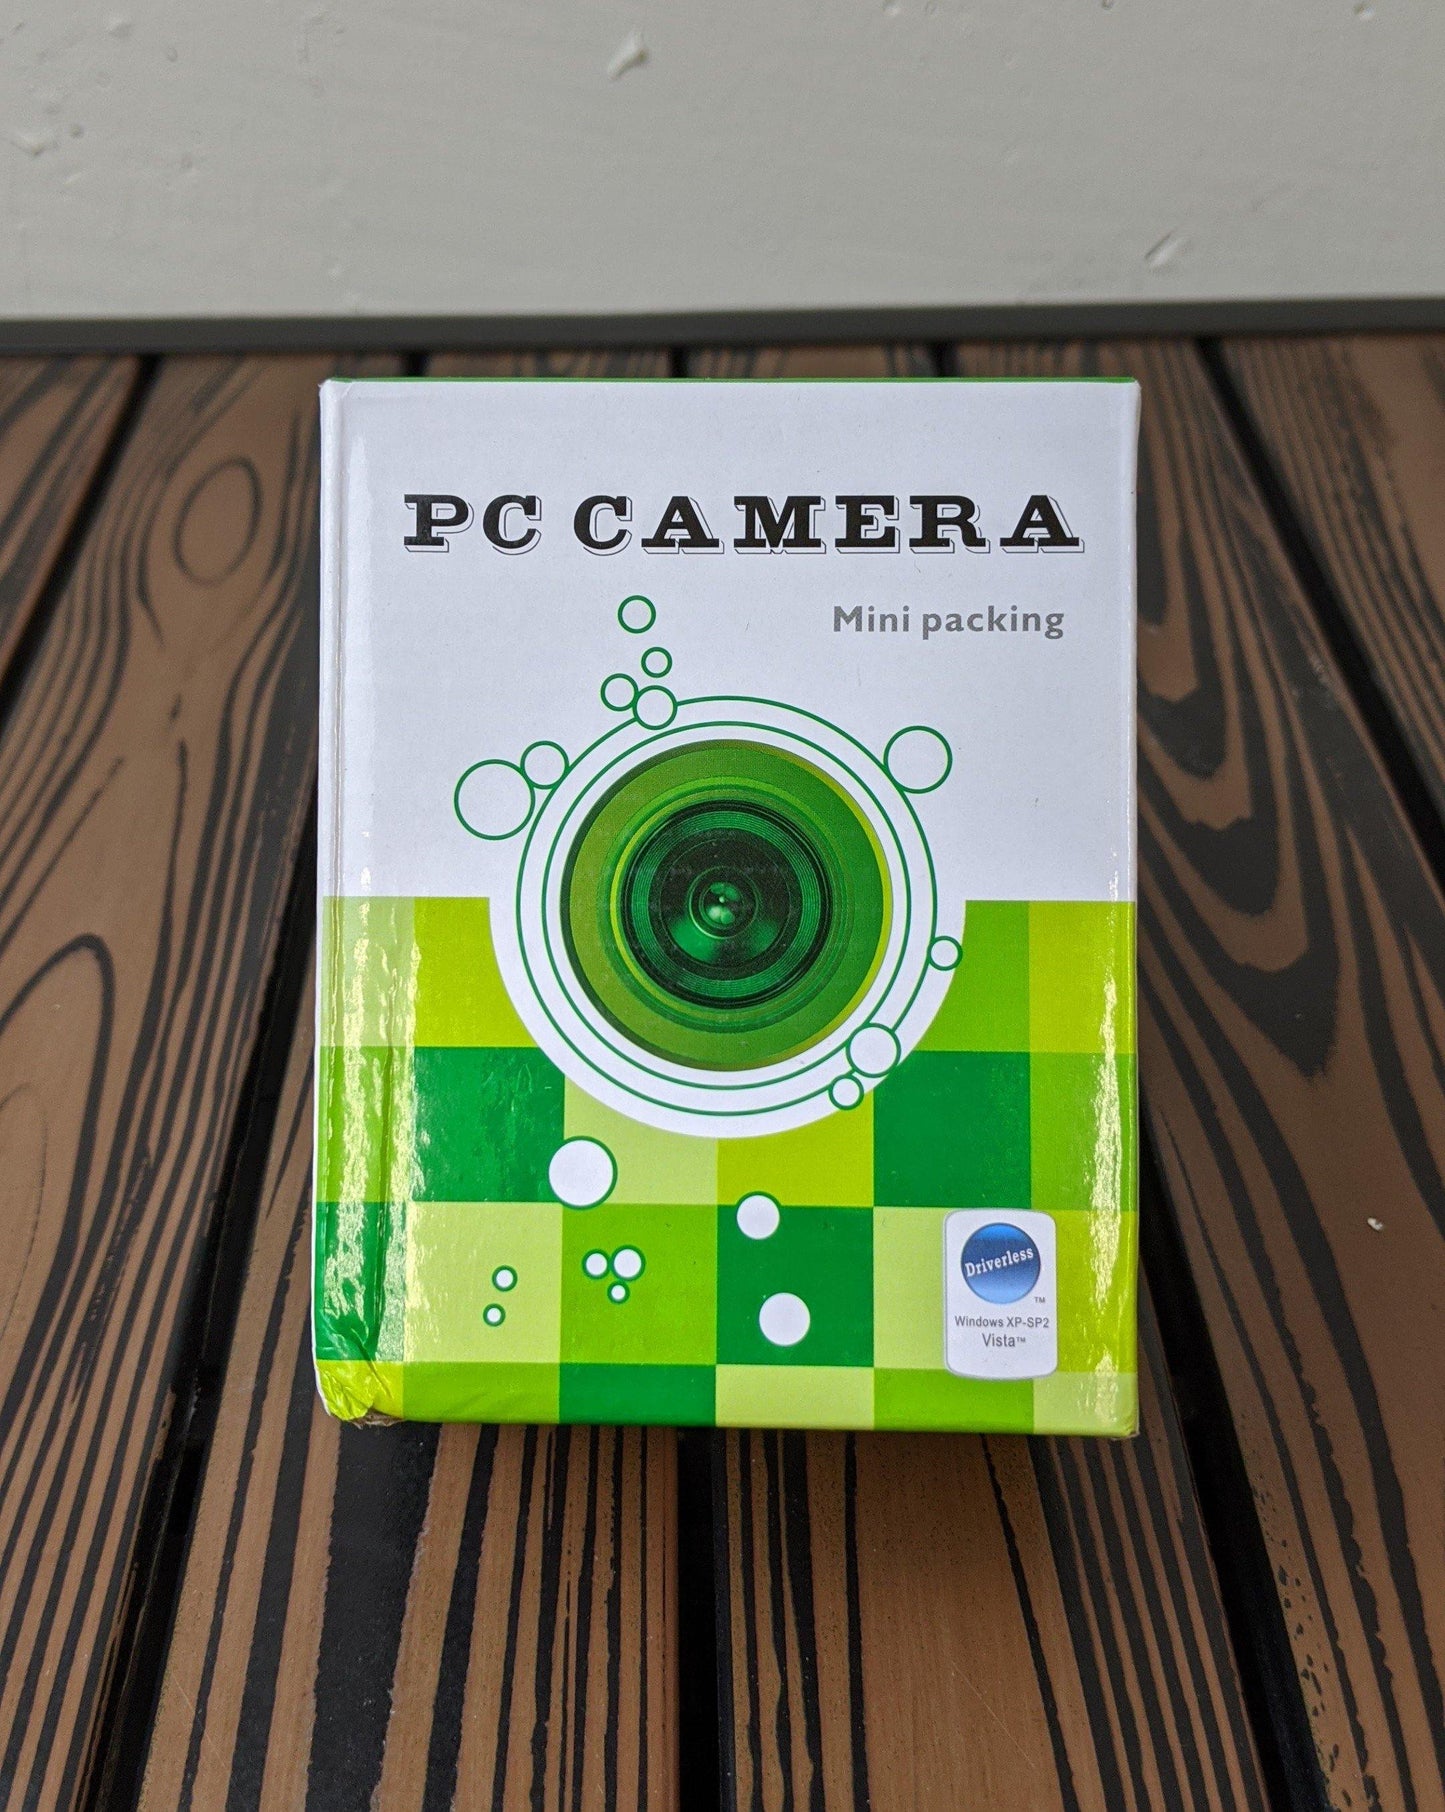 PC Camera mini pack - PCMaster Pro 